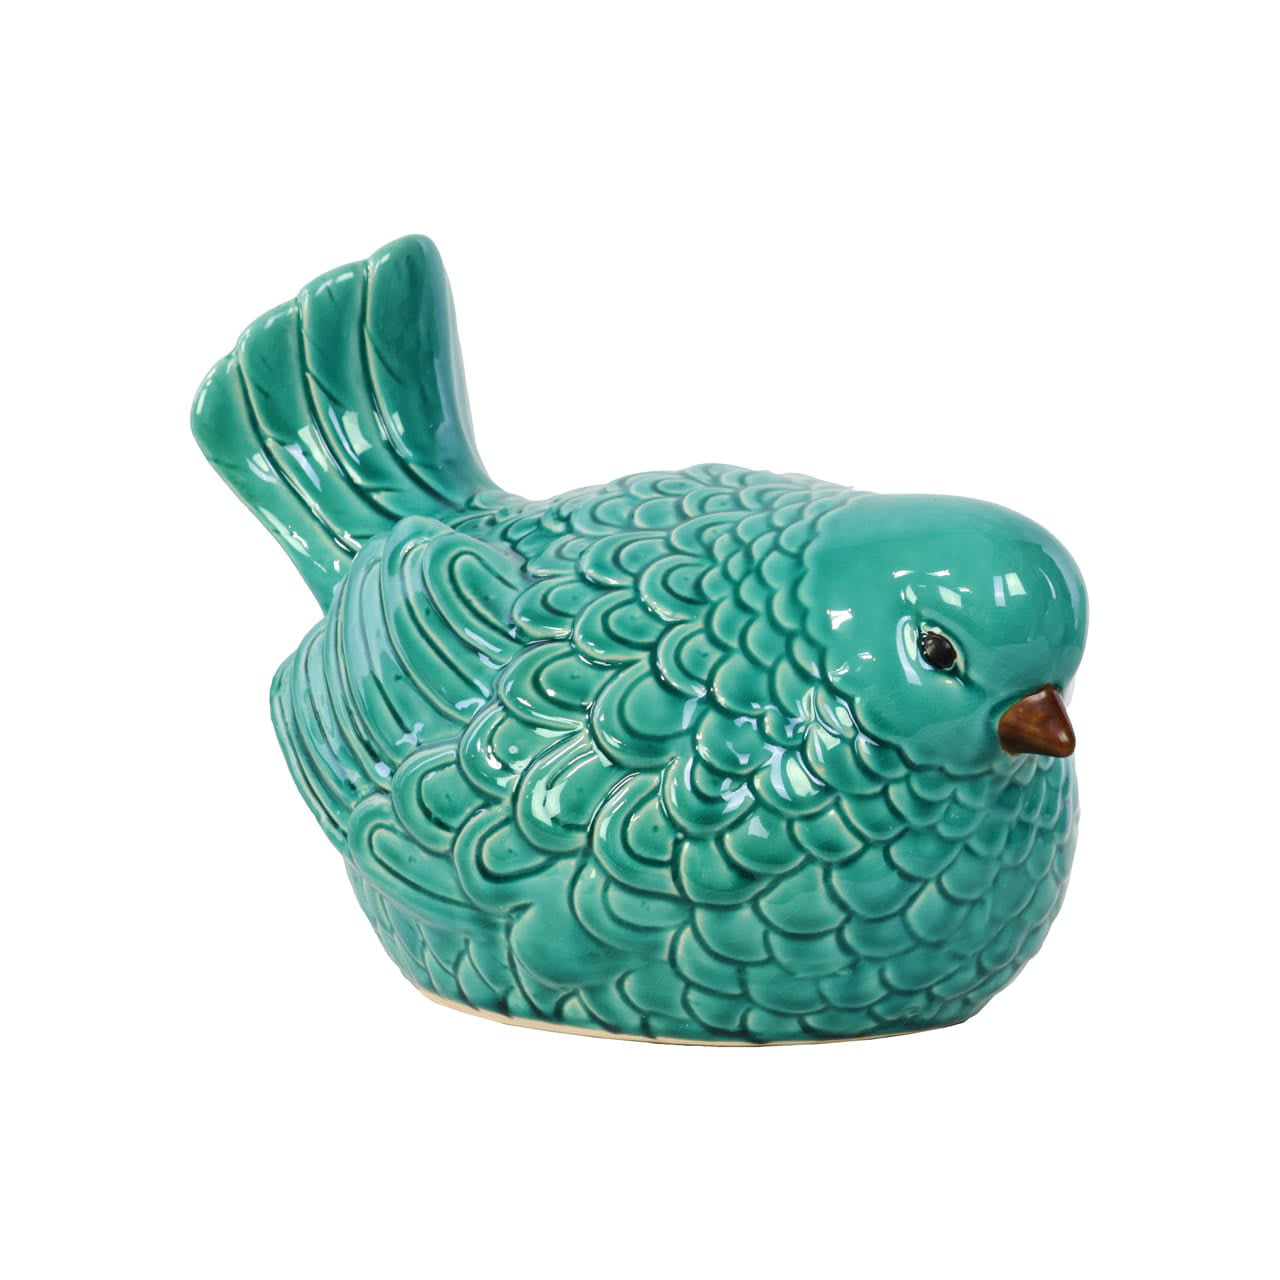 Turquoise Urban Trends Ceramic Nodding Bird Figurine with Gloss Finish